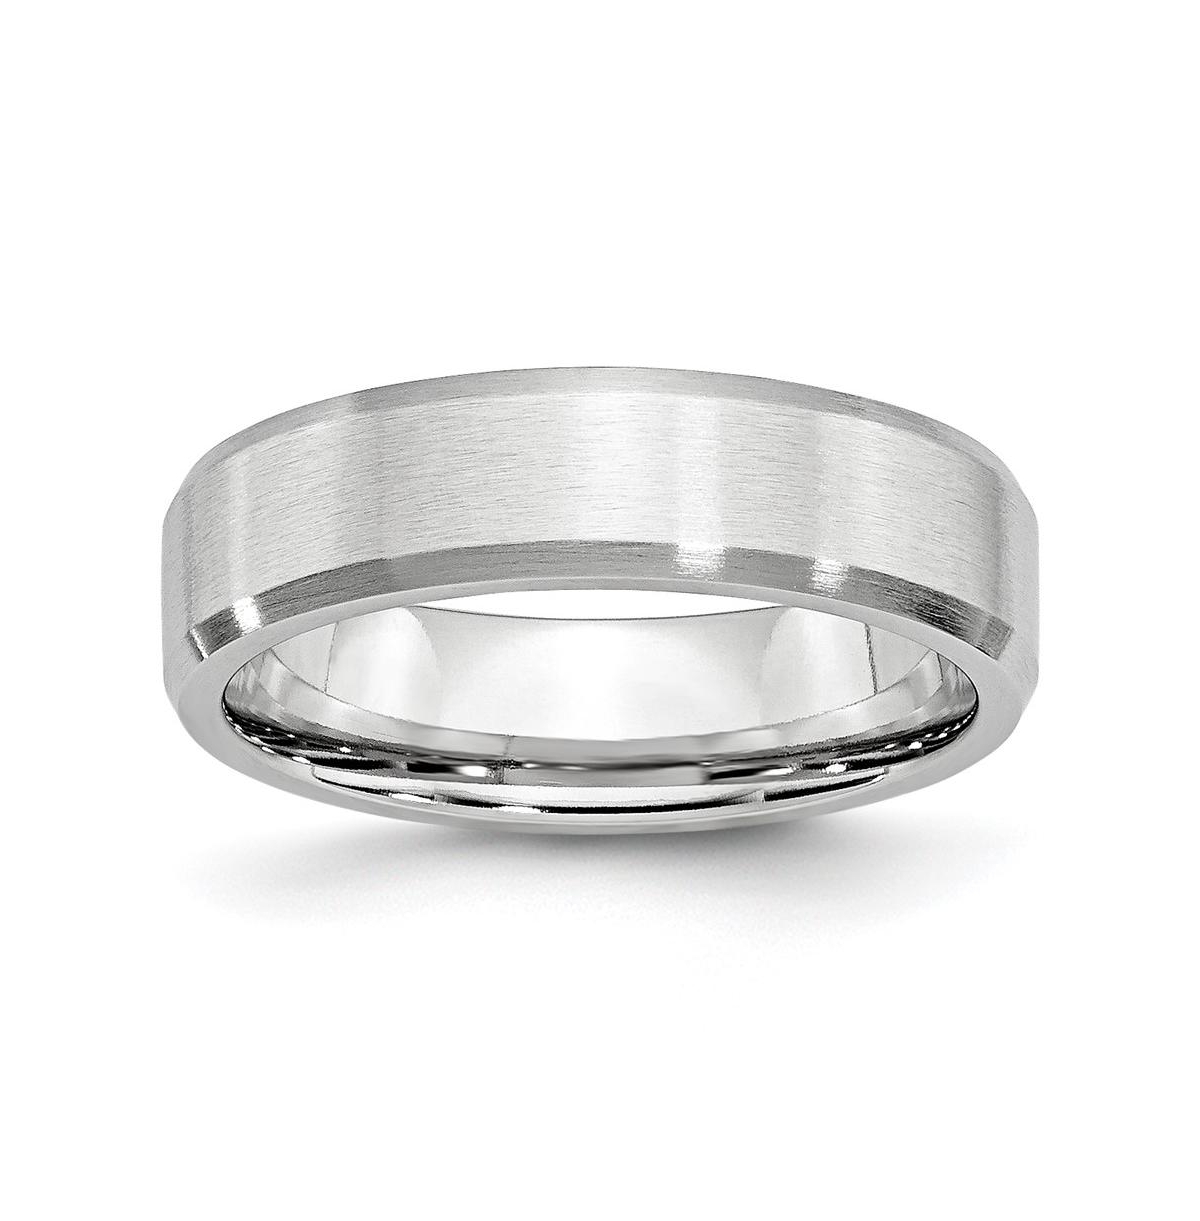 Cobalt Beveled Edge Satin Wedding Band Ring - Grey